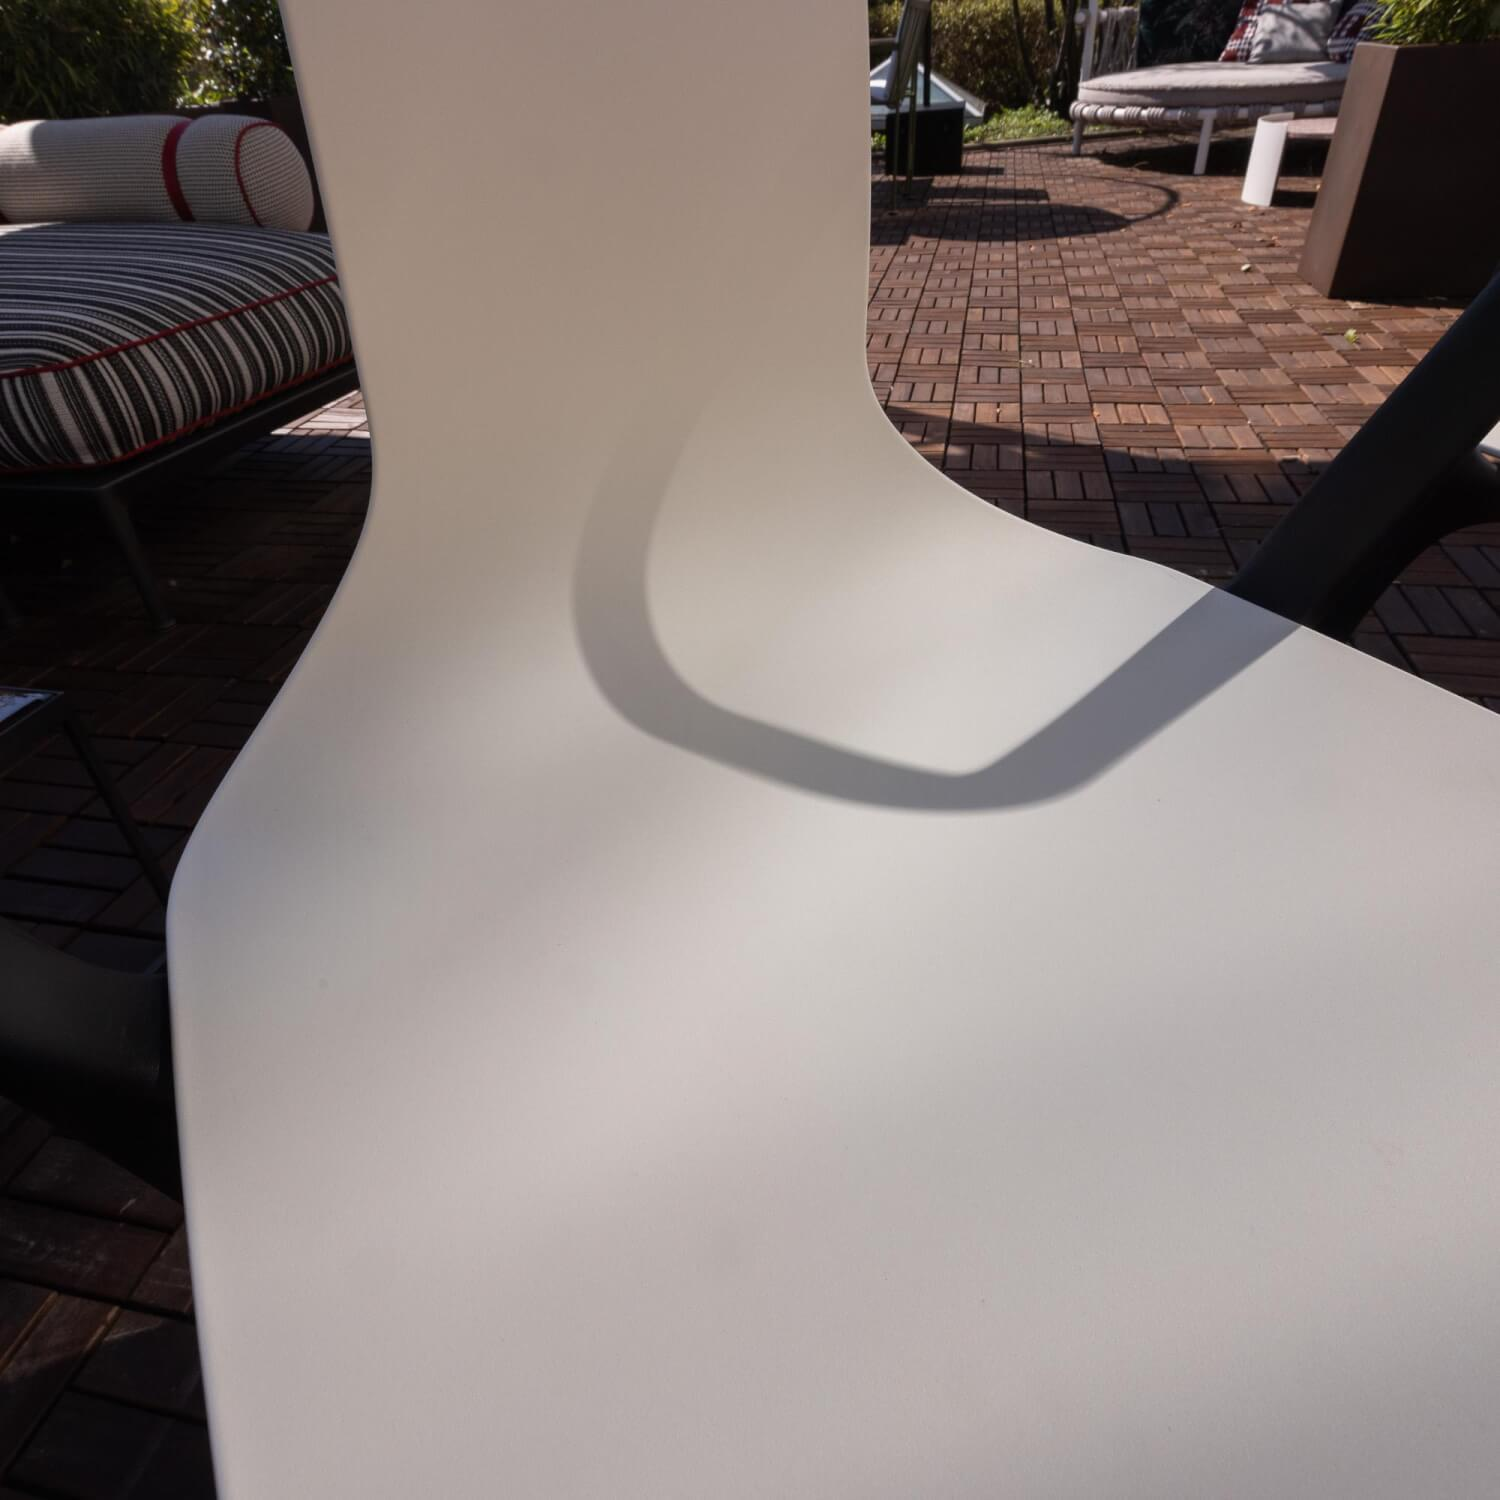 4er-Set Stuhl Outdoor Belleville Sitzschale Plastik Creme Gestell Kunststoff Tiefschwarz